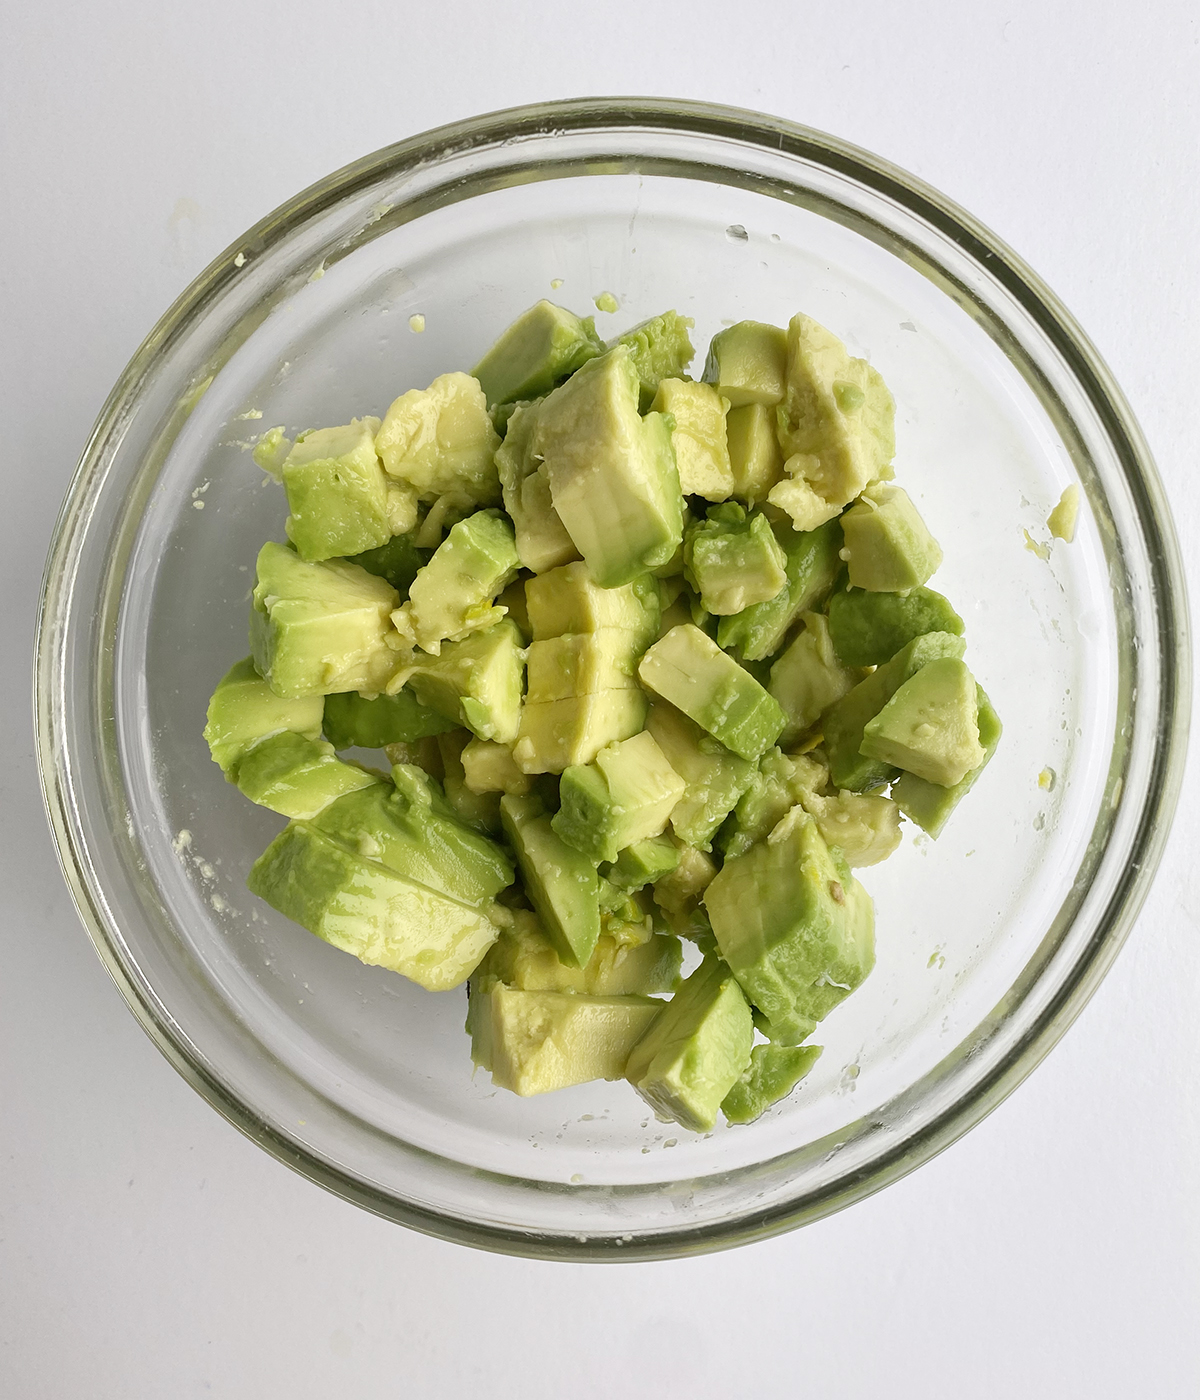 Chopped avocado in a bowl.